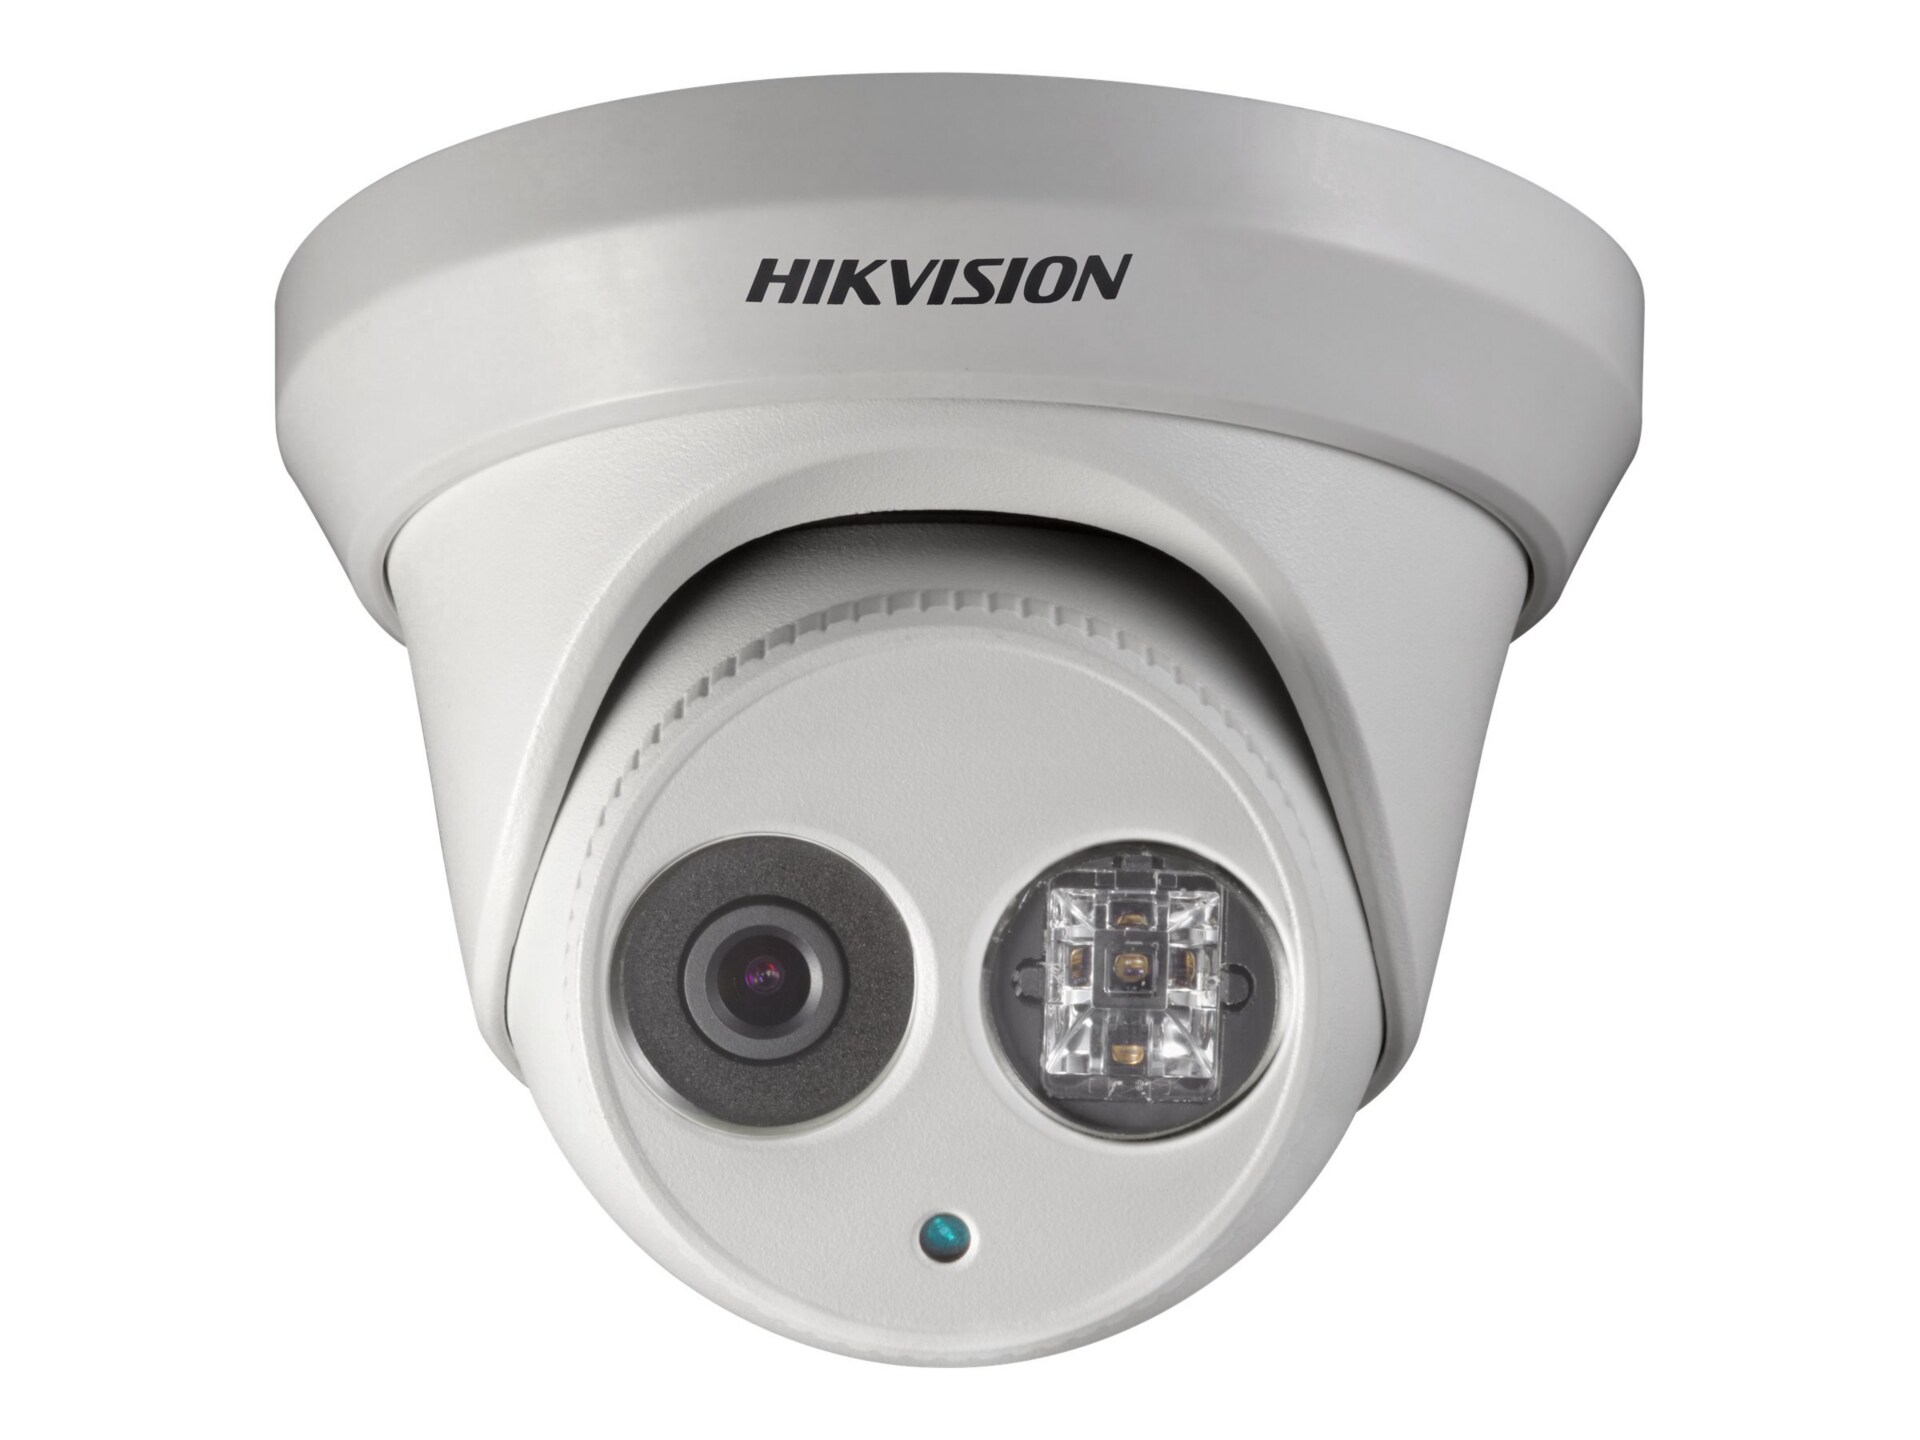 Hikvision DS-2CD2332-I - network surveillance camera